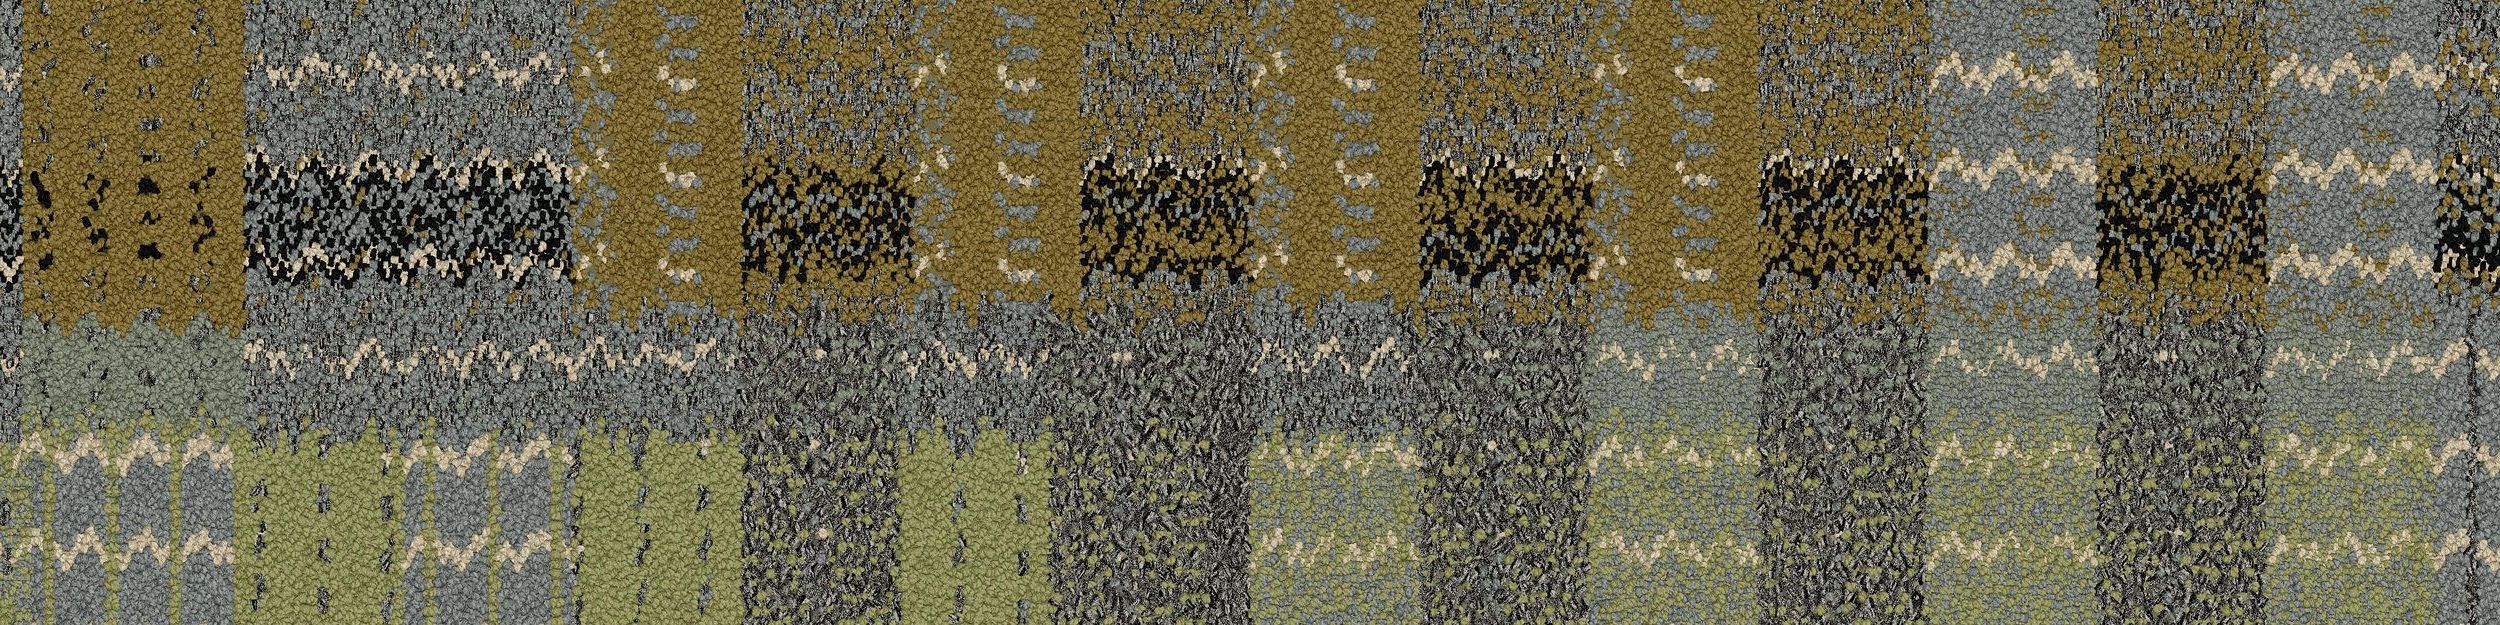 Social Fabric Carpet Tile In Meadow imagen número 2